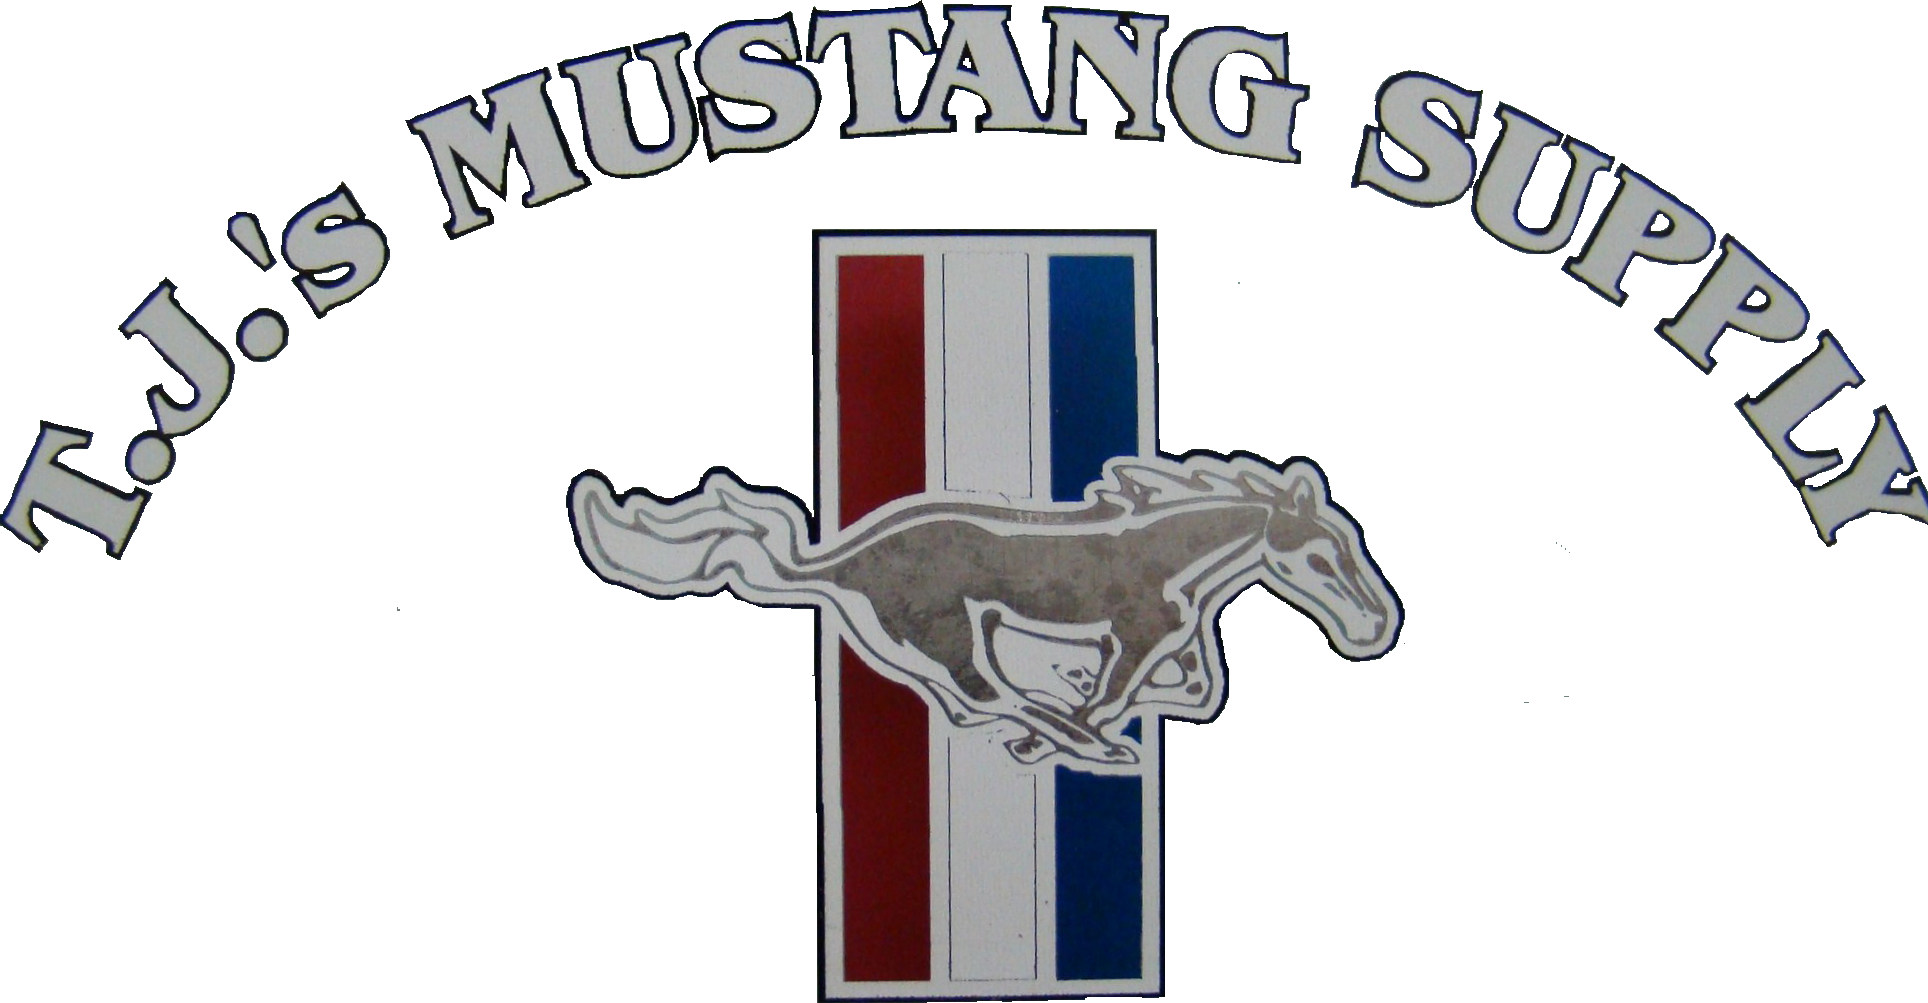 T.J.s Mustang Inc.